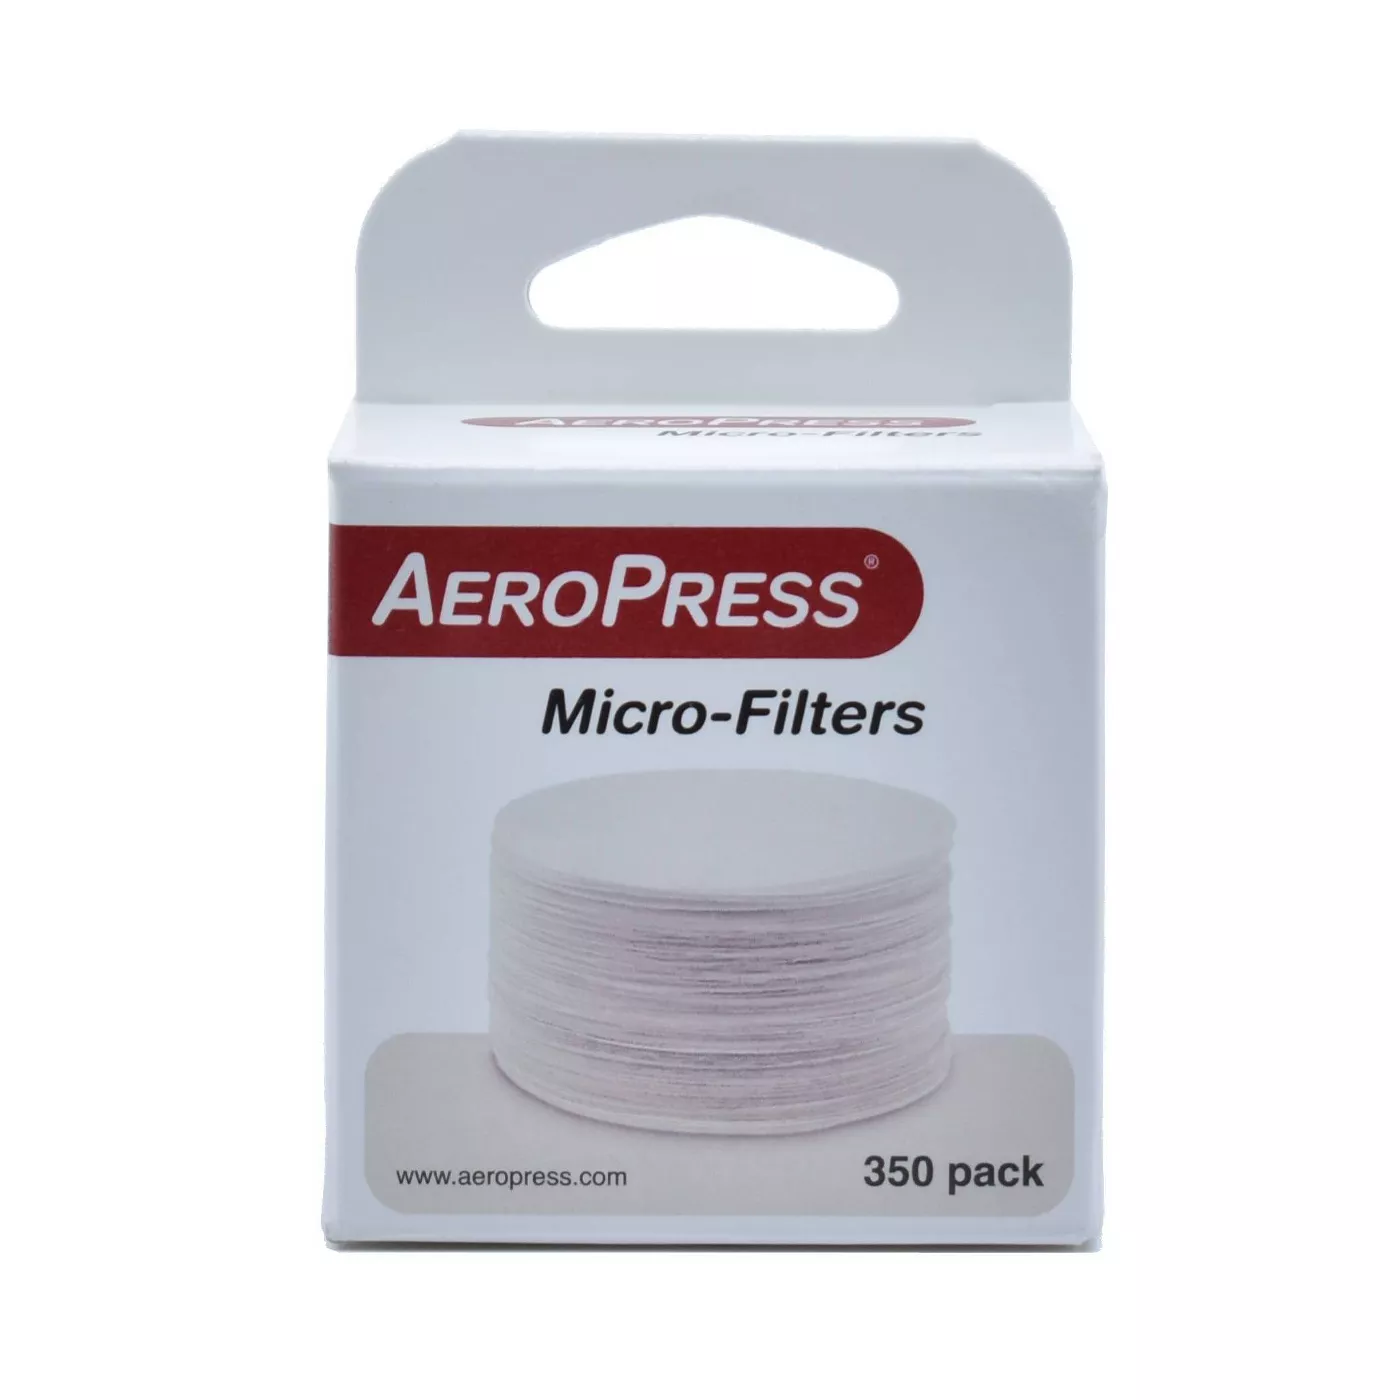 AeroPress Micro-Filters for AeroPress and AeroPress Go